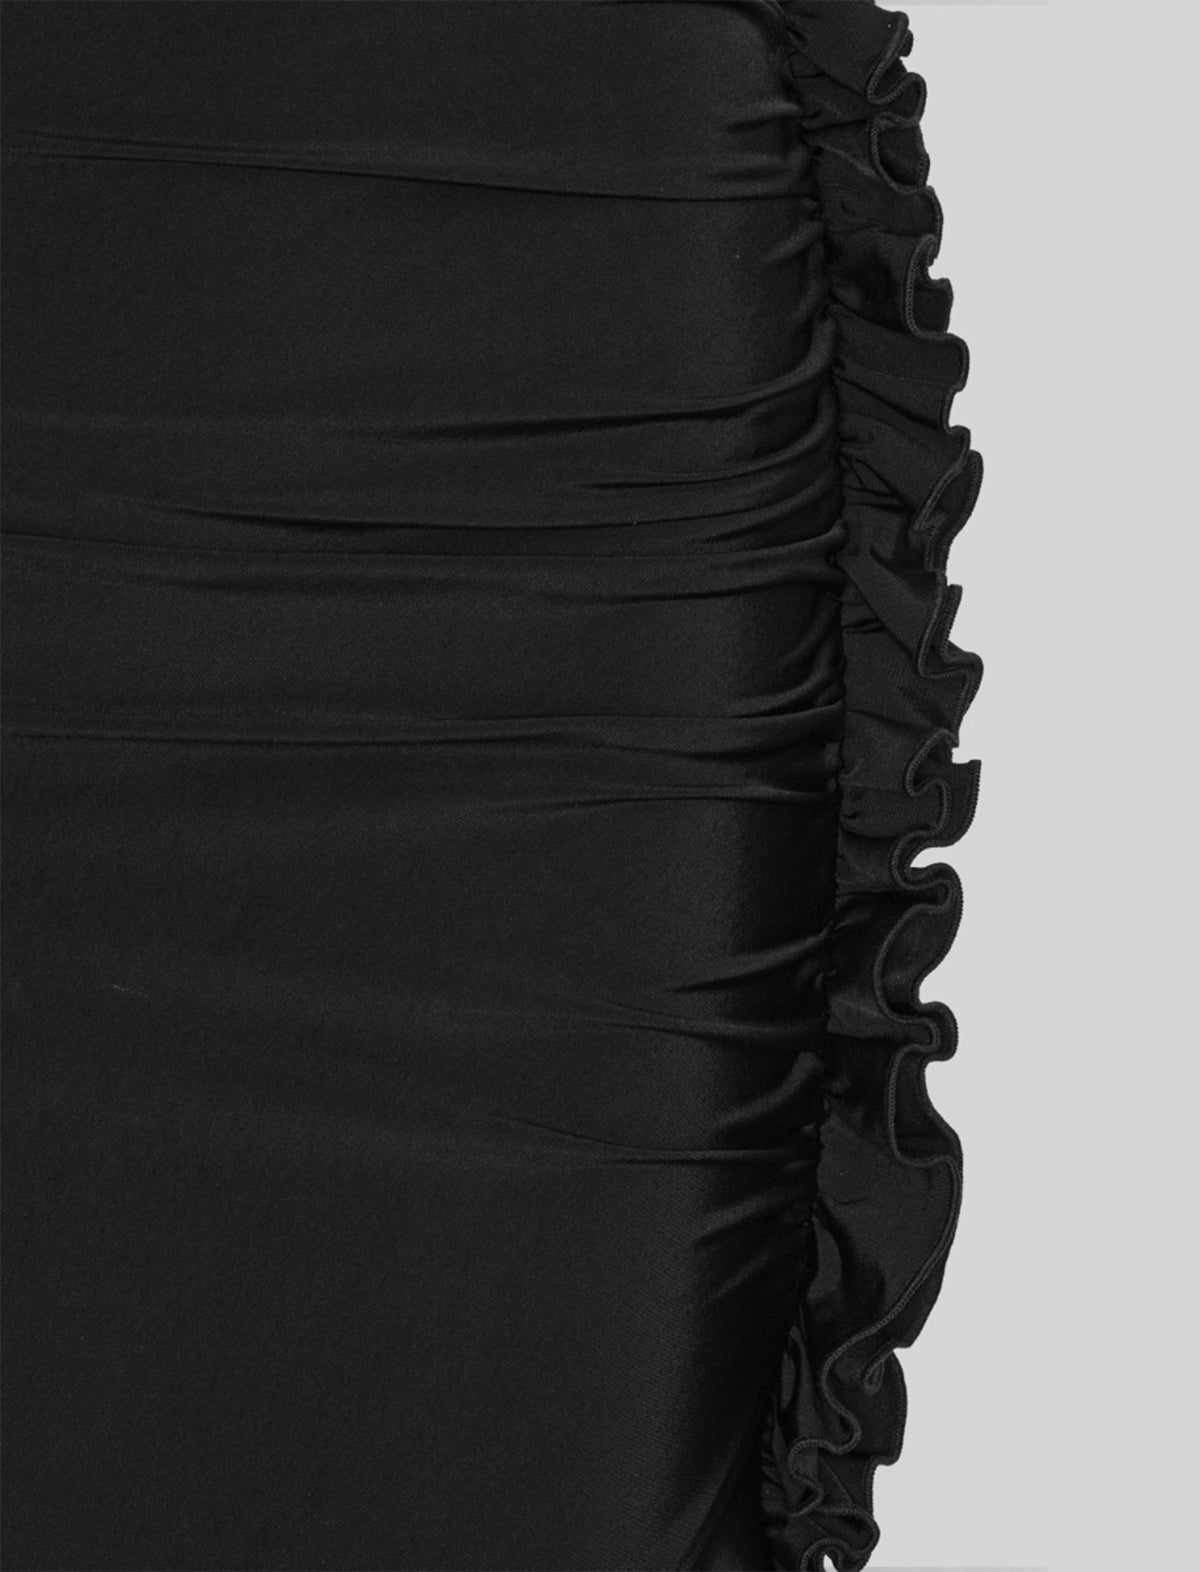 ROTATE BIRGER CHRISTENSEN Slinky Asymmetric Dress In Black